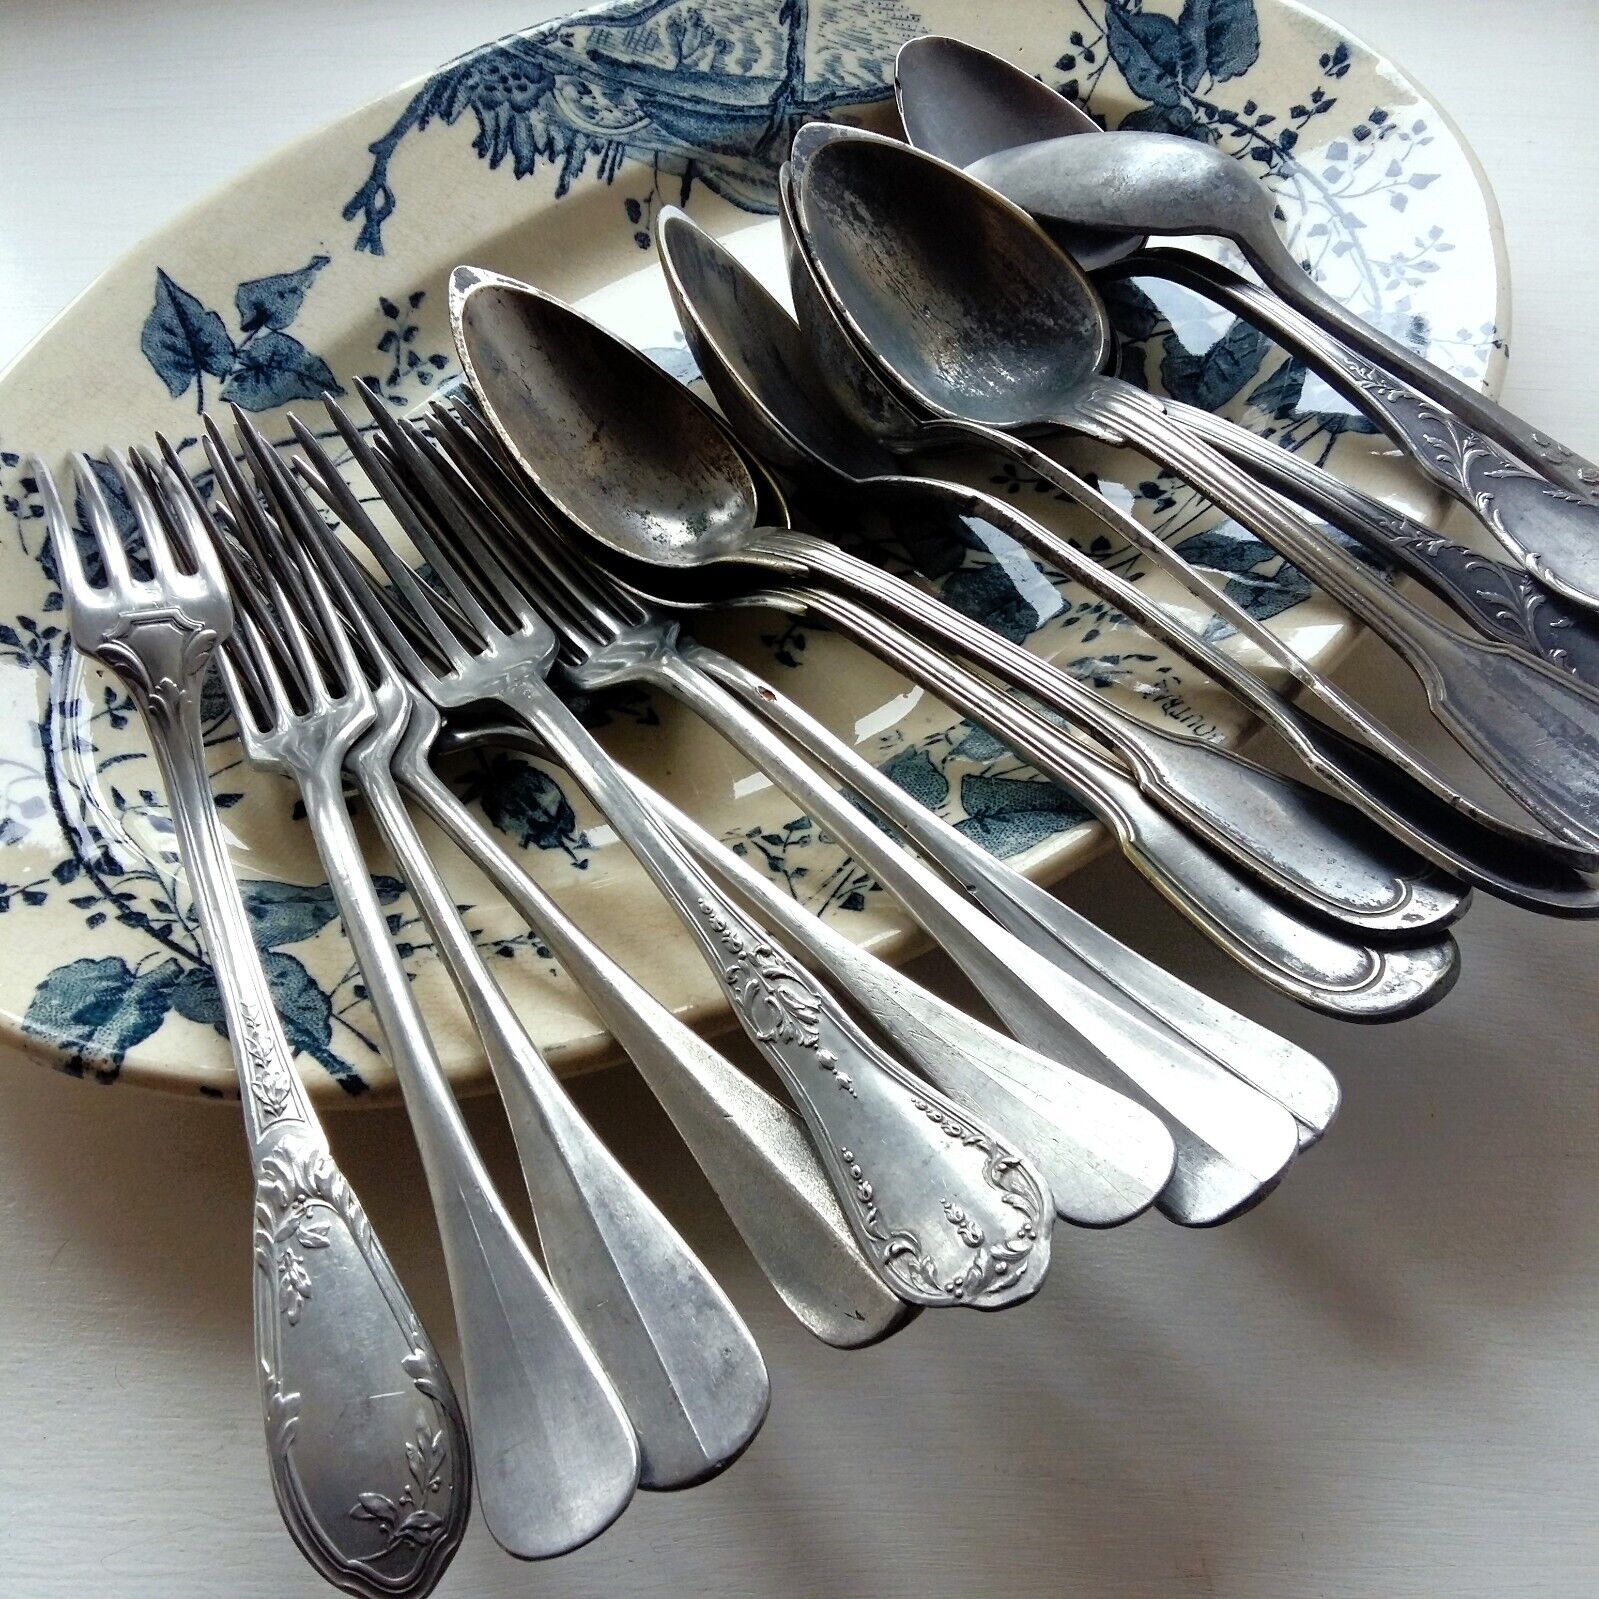 16 Antique Forks & Dessert Spoons Antique Cutlery Shabby French Vintage Flatware